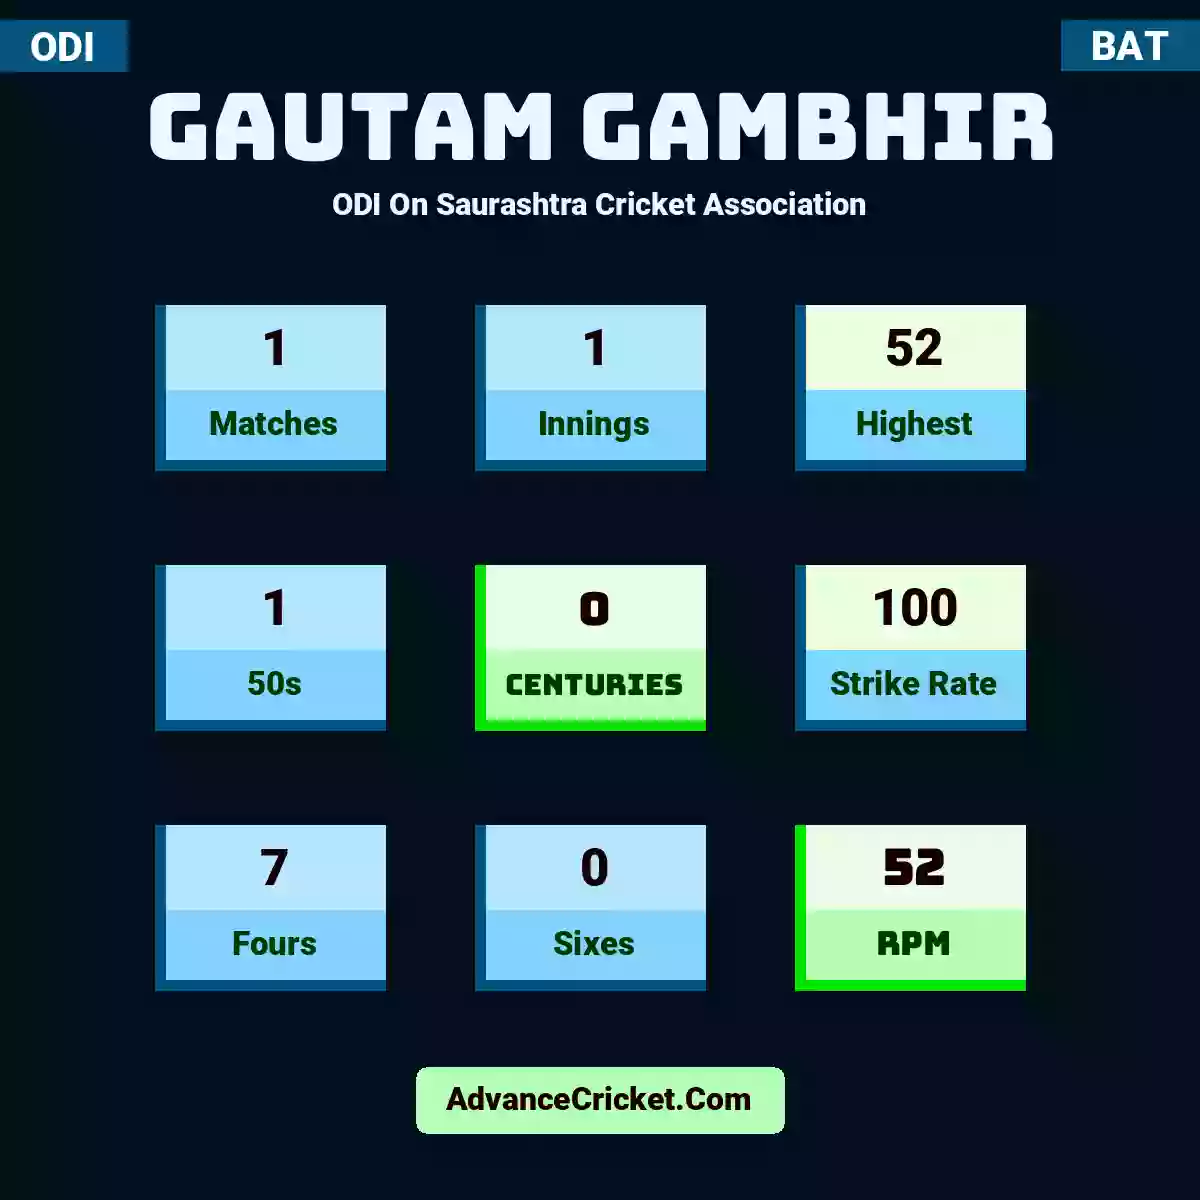 Gautam Gambhir ODI  On Saurashtra Cricket Association, Gautam Gambhir played 1 matches, scored 52 runs as highest, 1 half-centuries, and 0 centuries, with a strike rate of 100. G.Gambhir hit 7 fours and 0 sixes, with an RPM of 52.